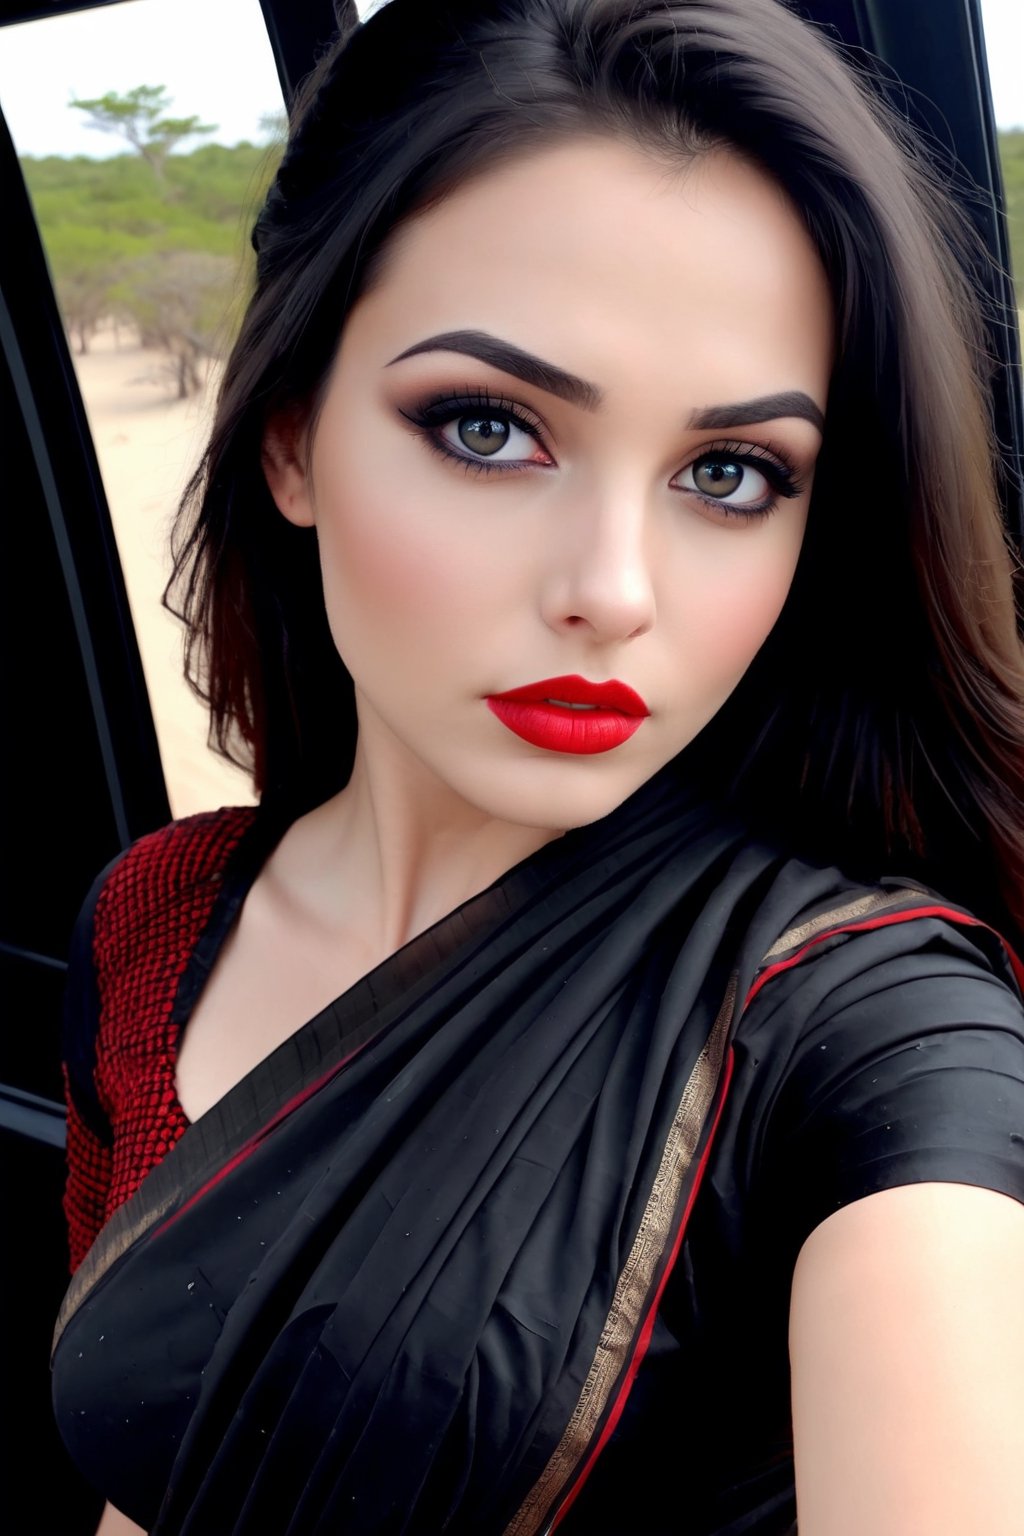 beautiful girl, black saree, real Indian beauty, black eyes, red lips, at Dune safari,